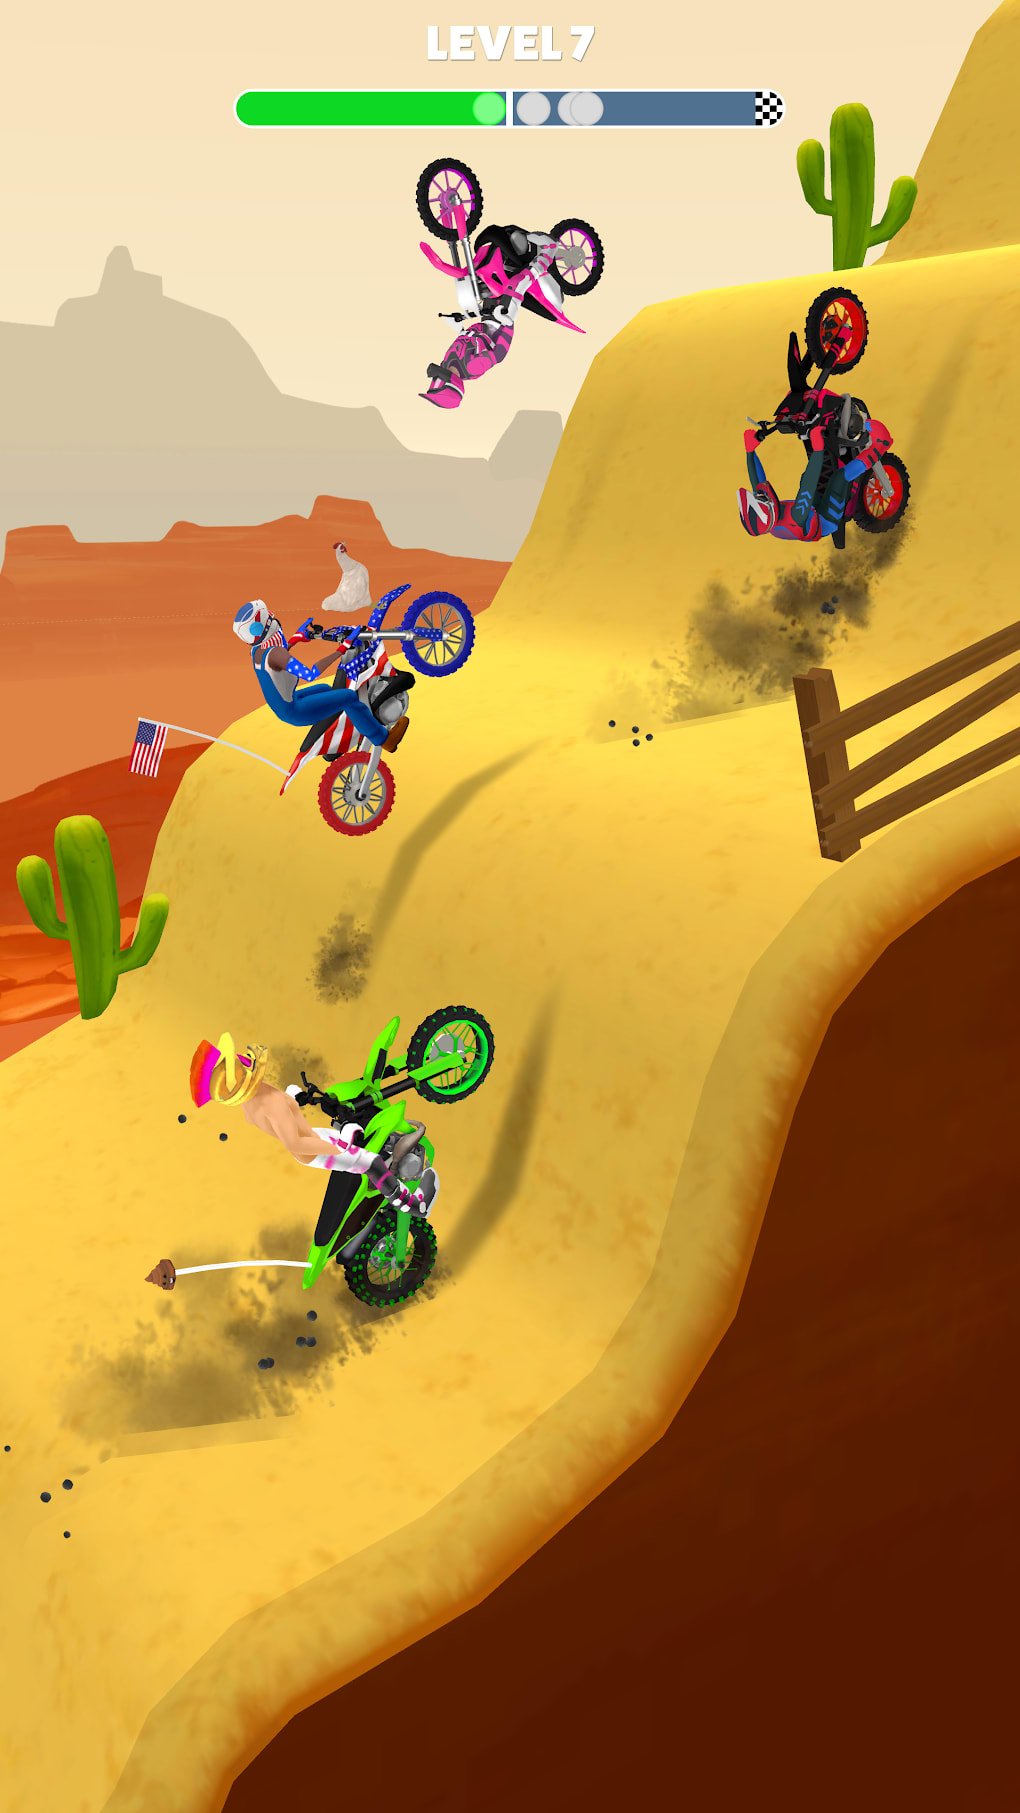 Hill Climb Moto,Free Bike Game For Mobile & PC/ Mac